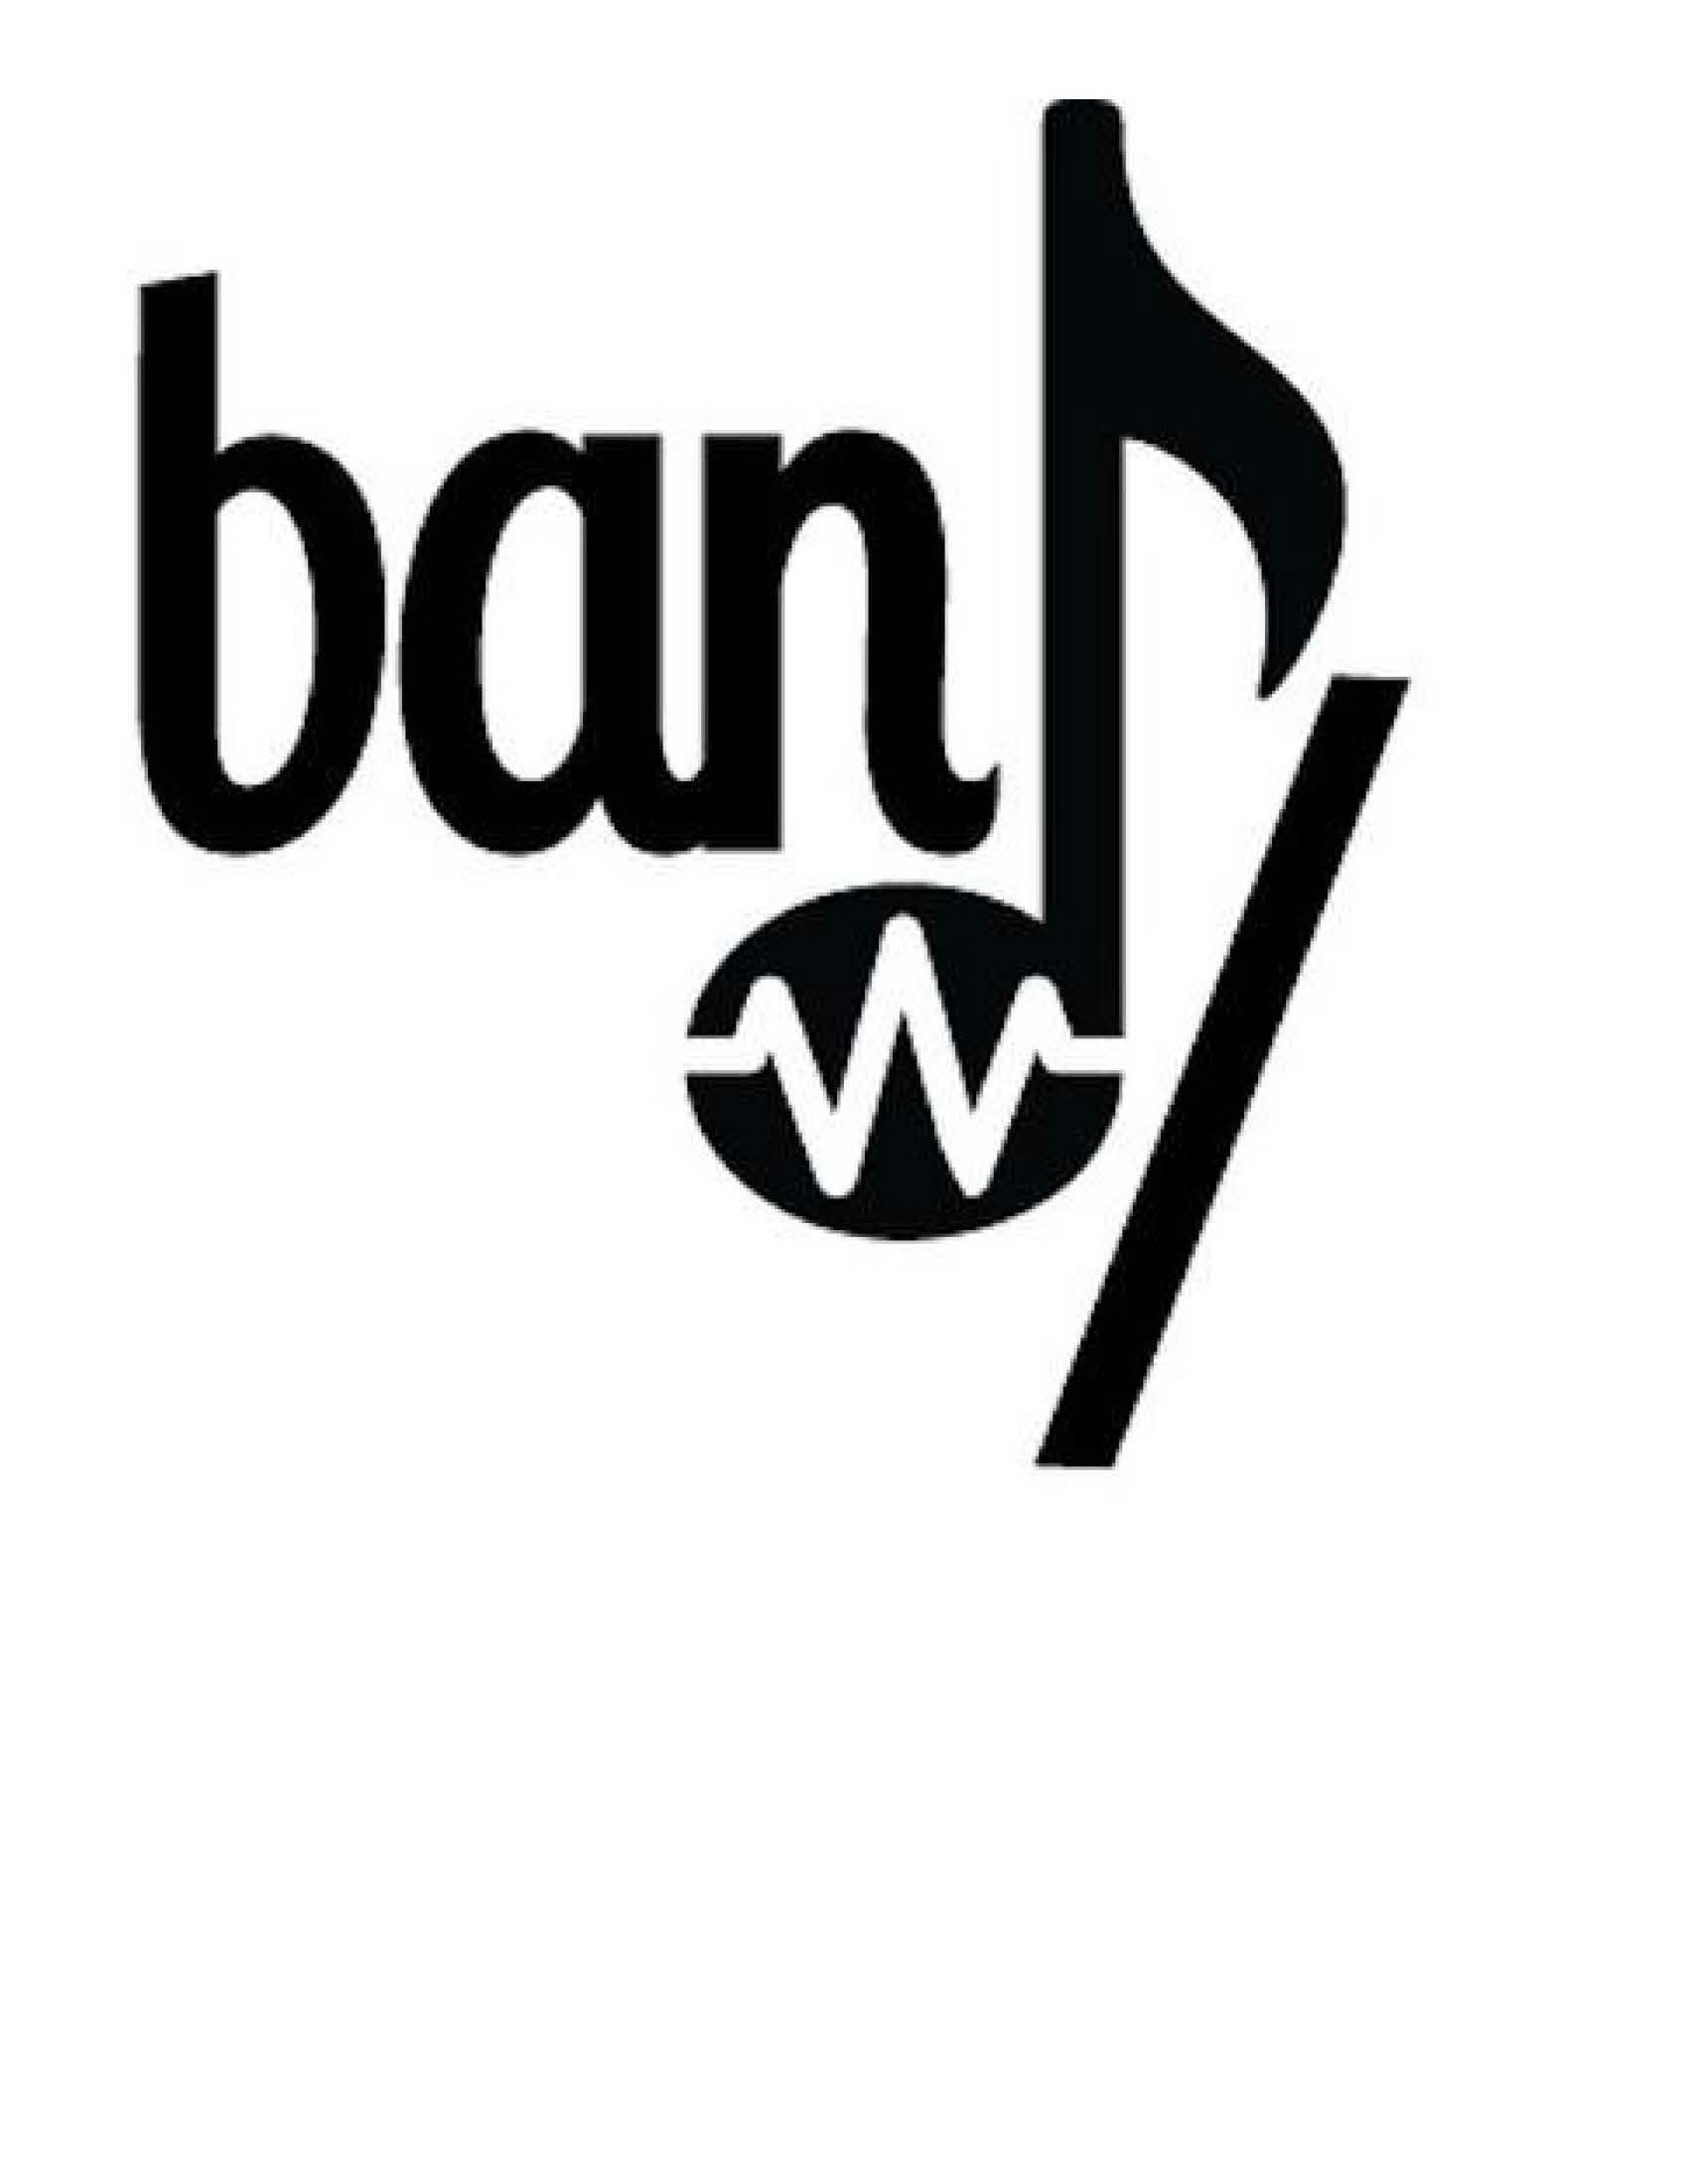 Trademark Logo BAND